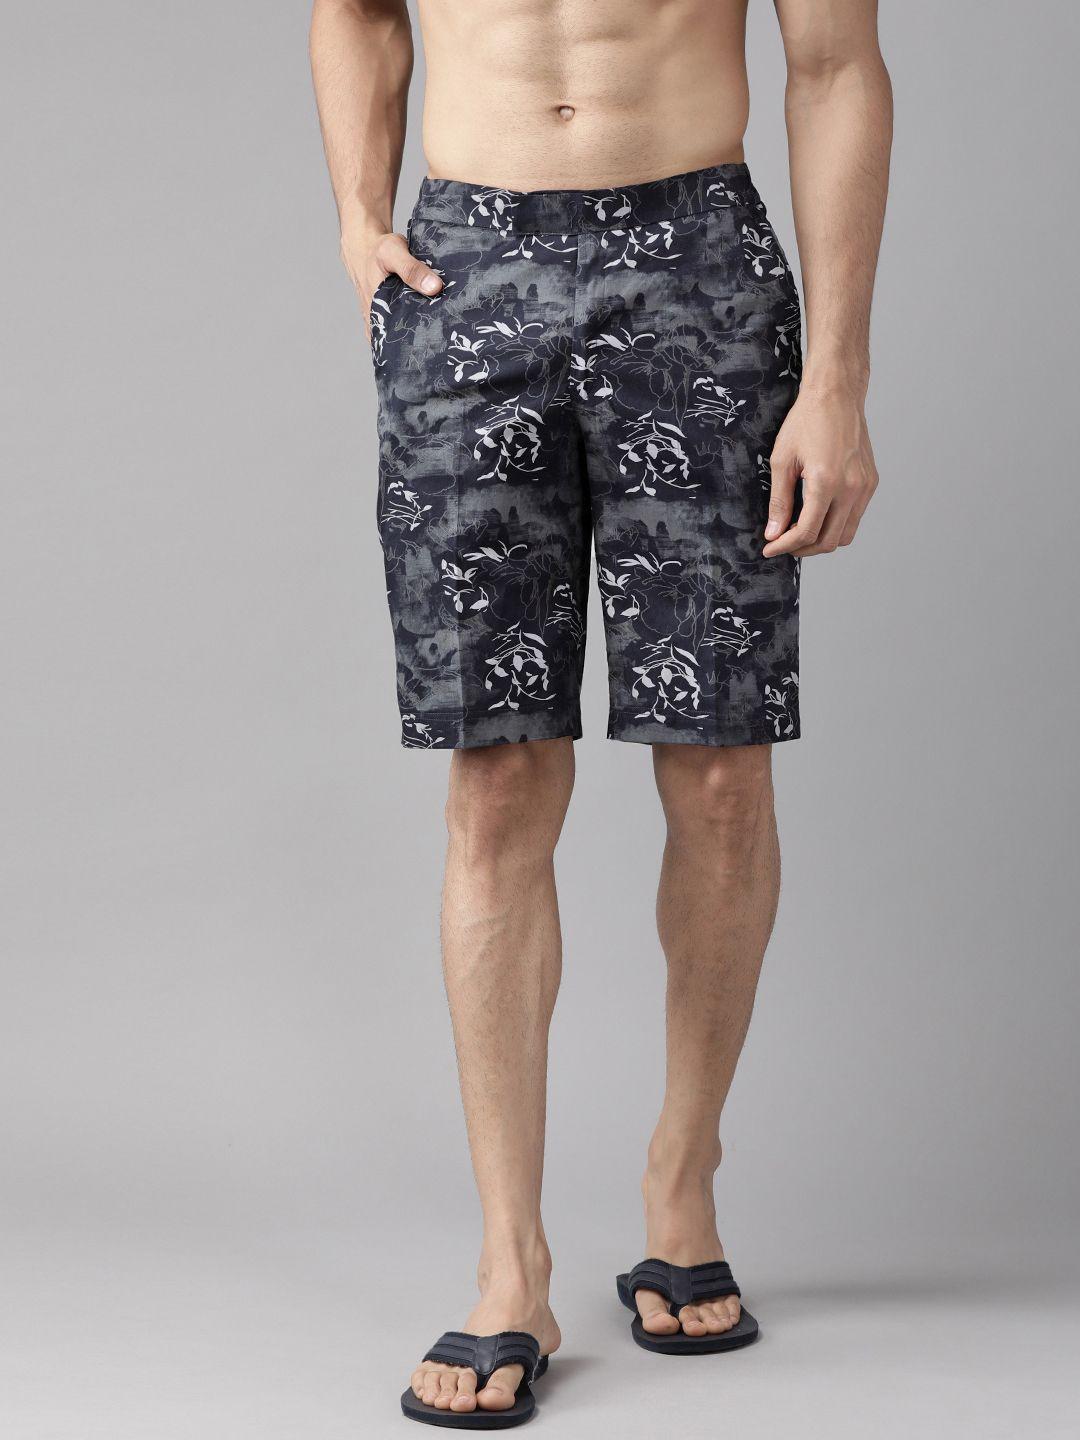 shaftesbury-london-men-navy-blue-&-grey-printed-slim-fit-surfing-sports-shorts